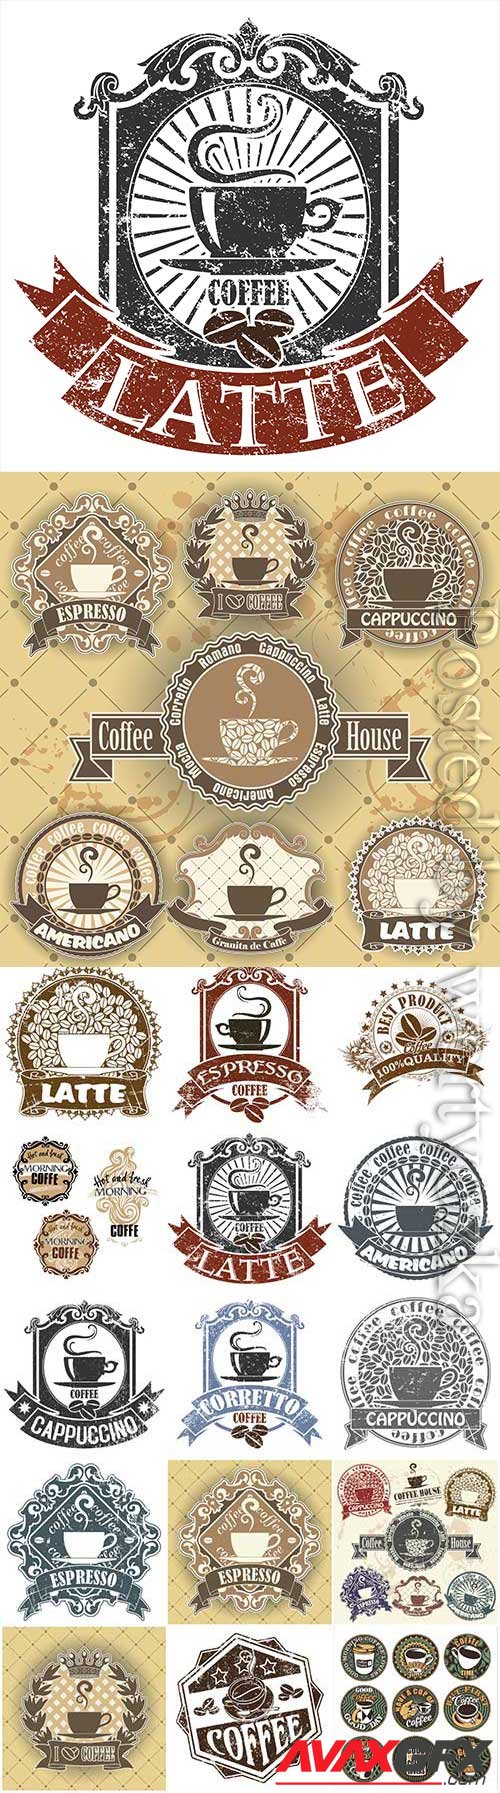 Retro coffee labels in vector